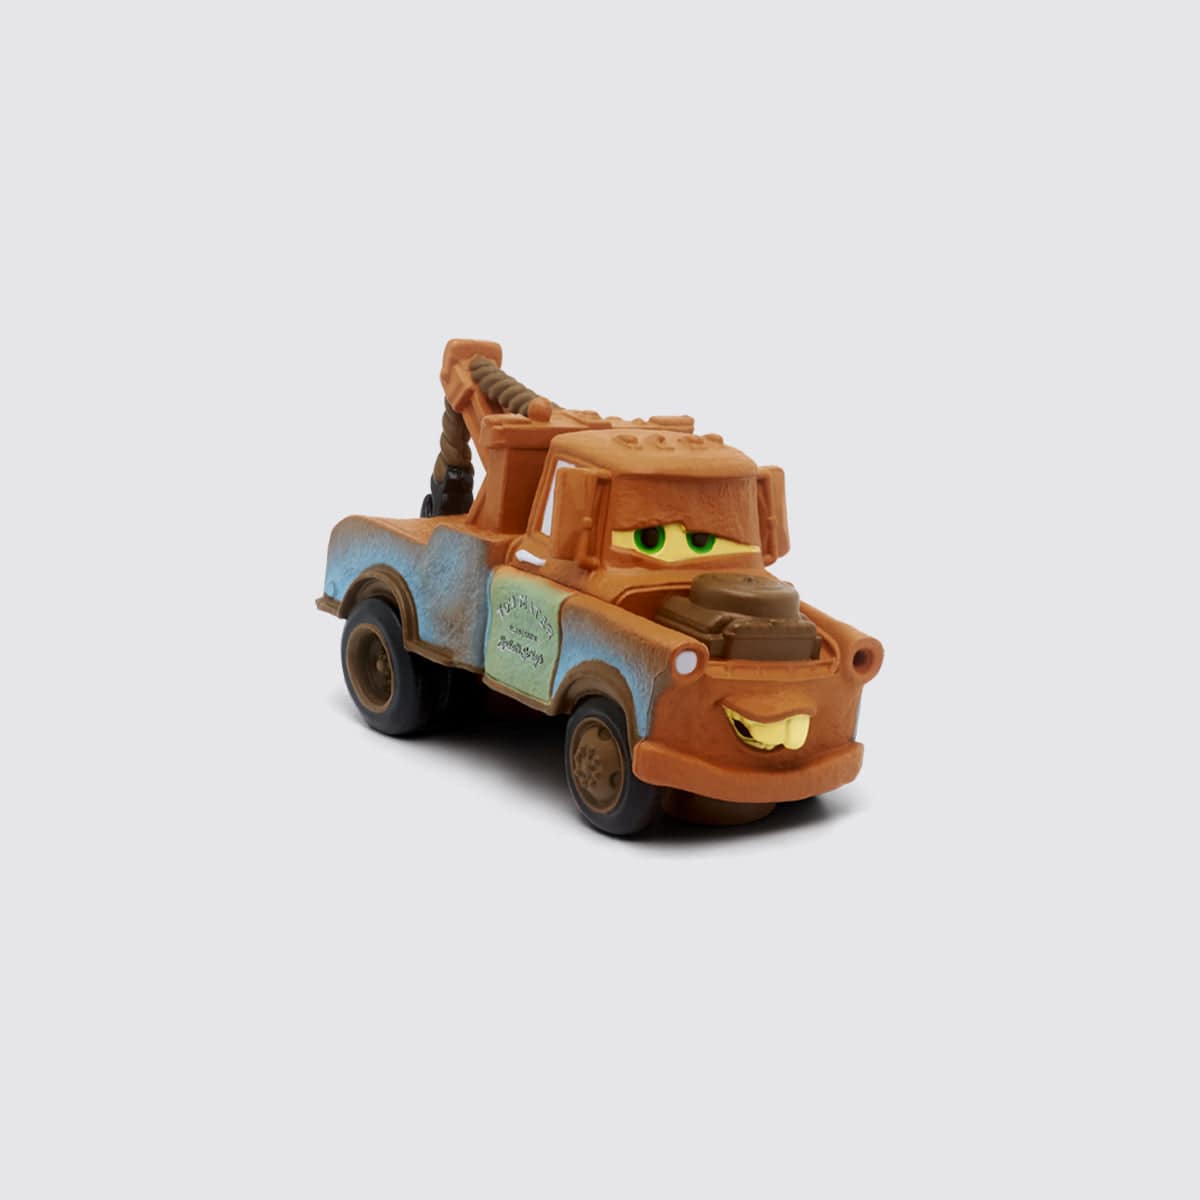 tonies® I Disney & Pixar Toy Story: Woody Tonie I Buy now